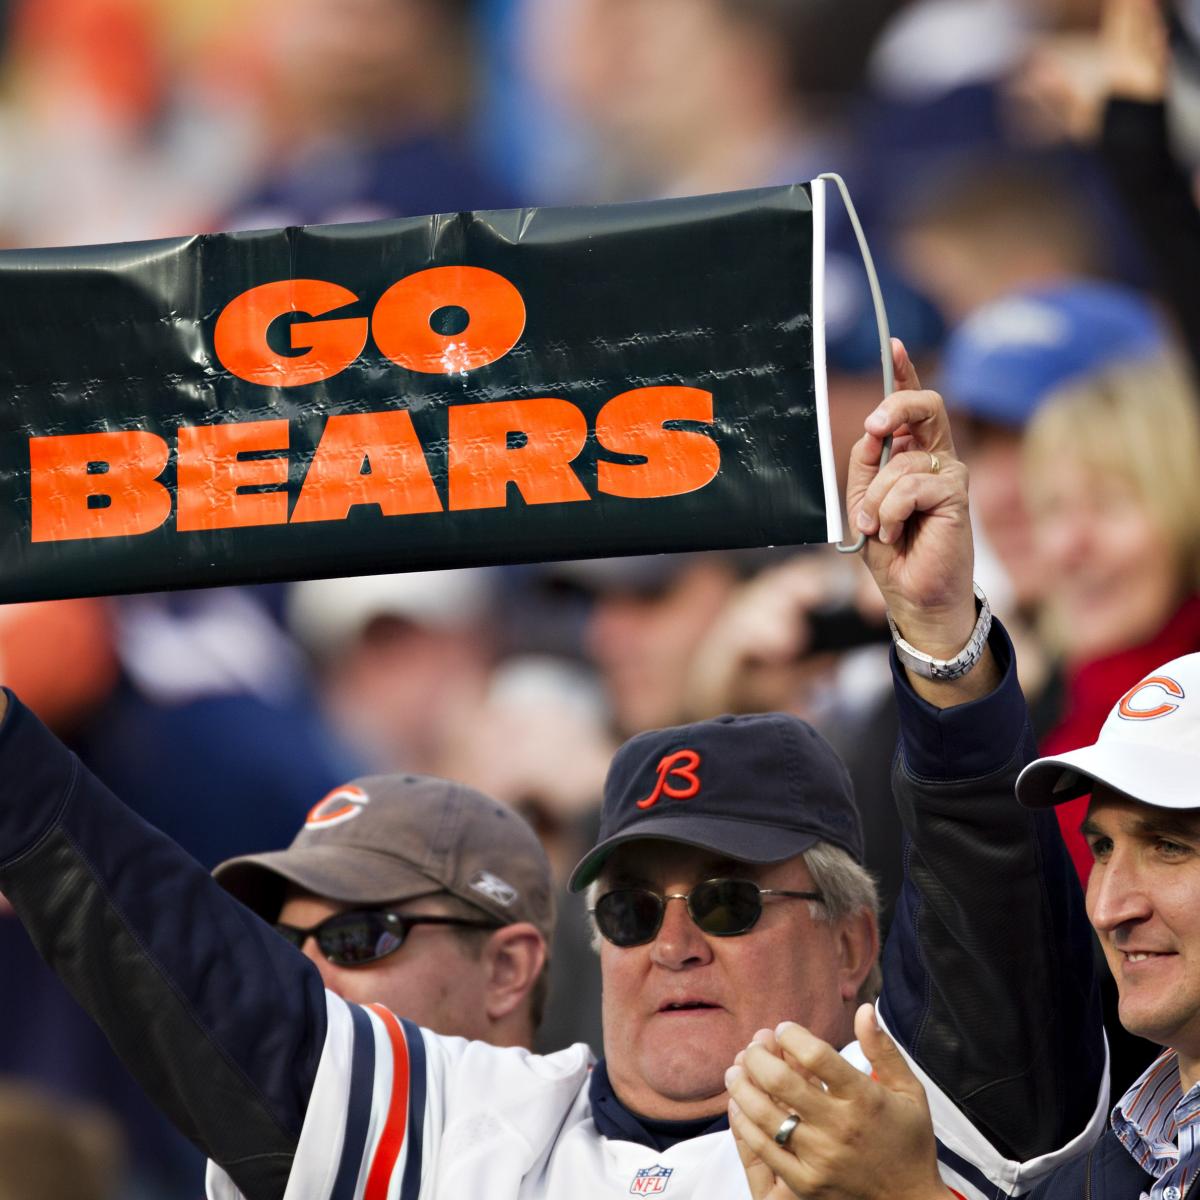 Chicago Bears Win over Houston Sunday Night Should Finally Silence the